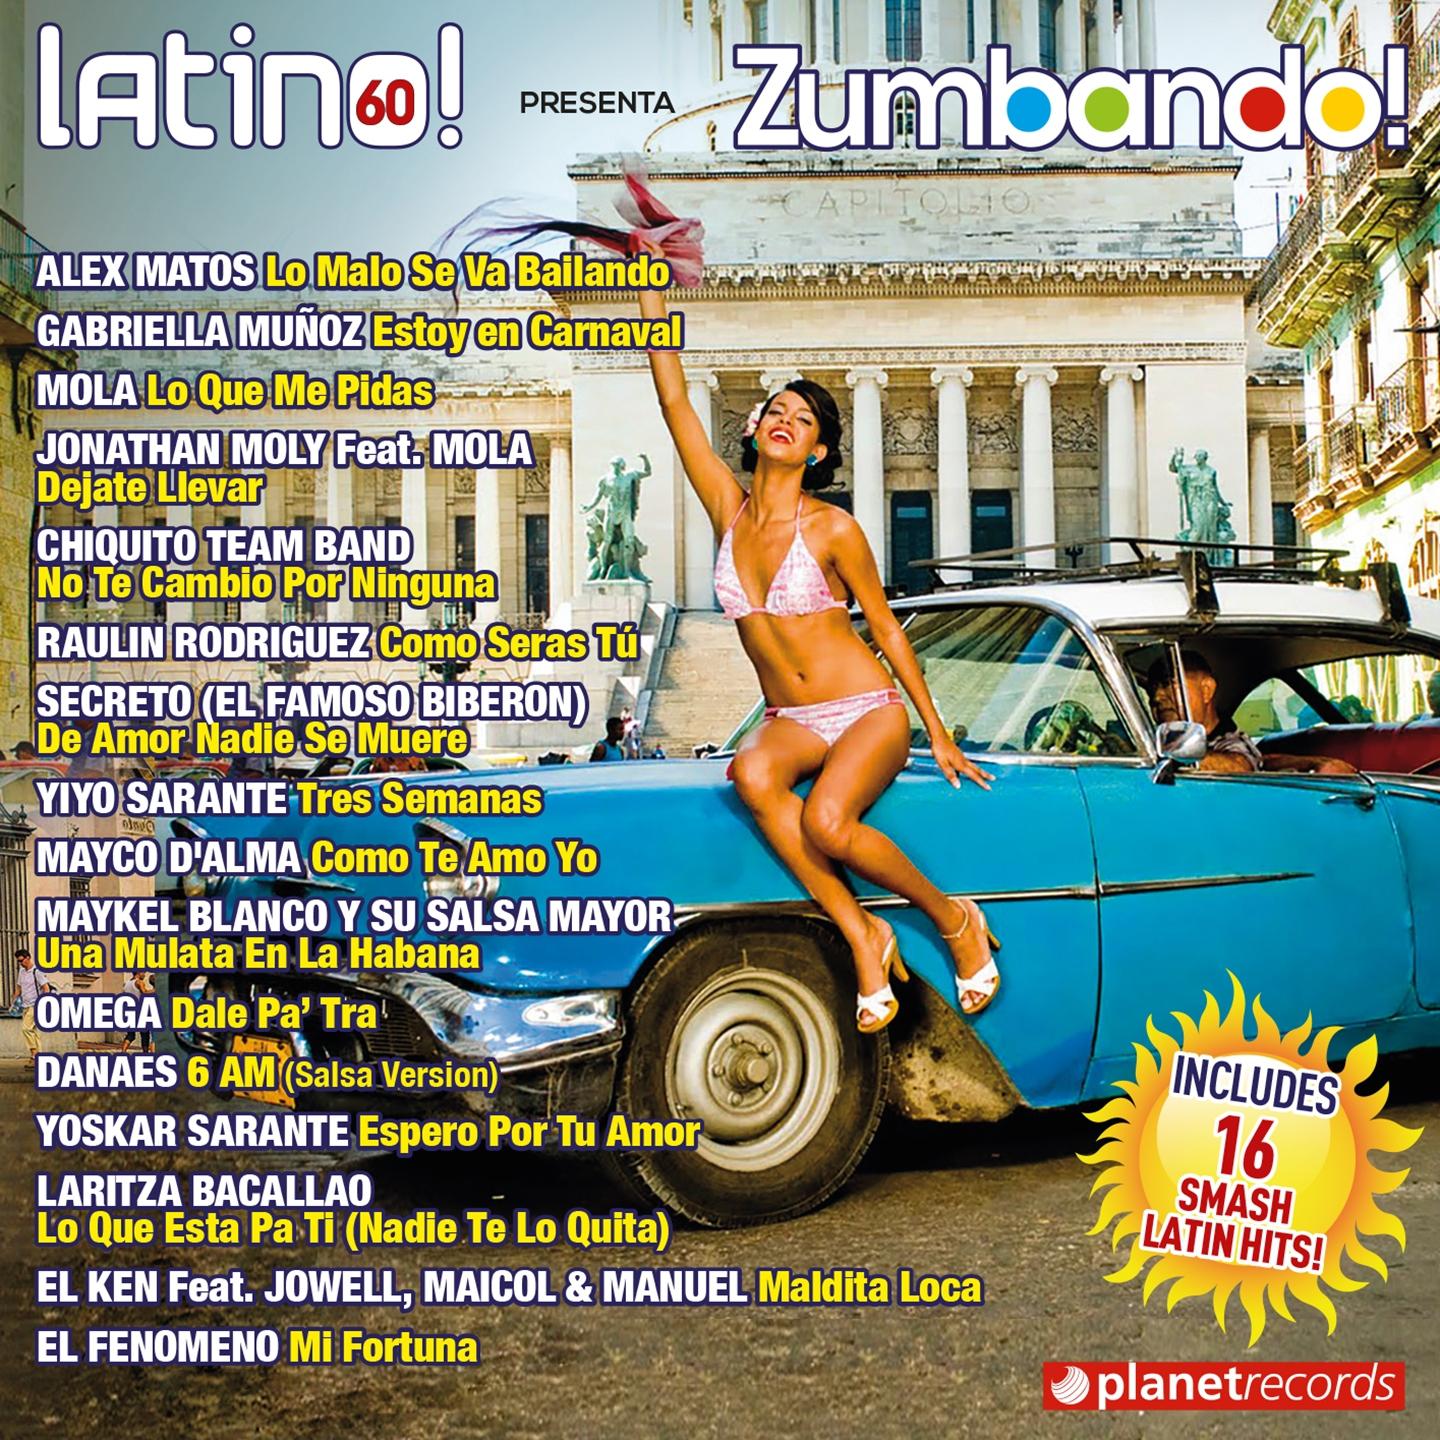 Постер альбома Latino 60 presenta Zumbando (World Edition) (Salsa Bachata Merengue Reggaeton Dembow Fitness)